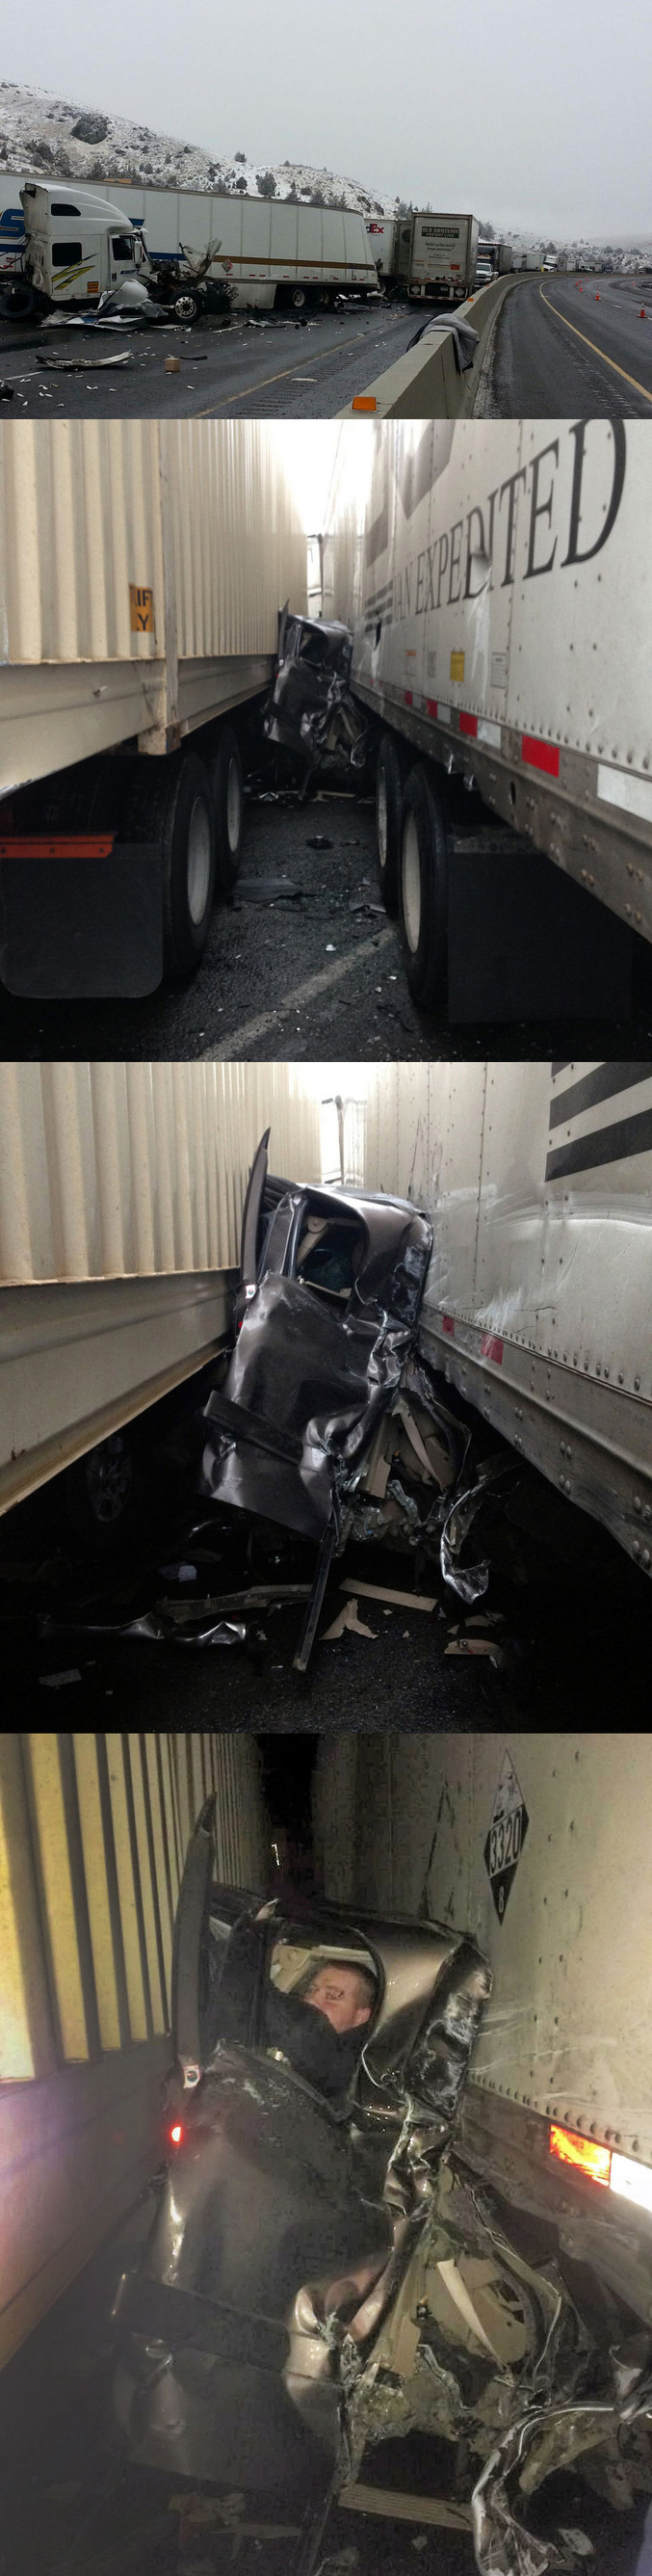 Source http://www.oregonlive.com/pacific-northwest-news/index.ssf/2015/01/interstate_84_semi-truck_crash_1.html